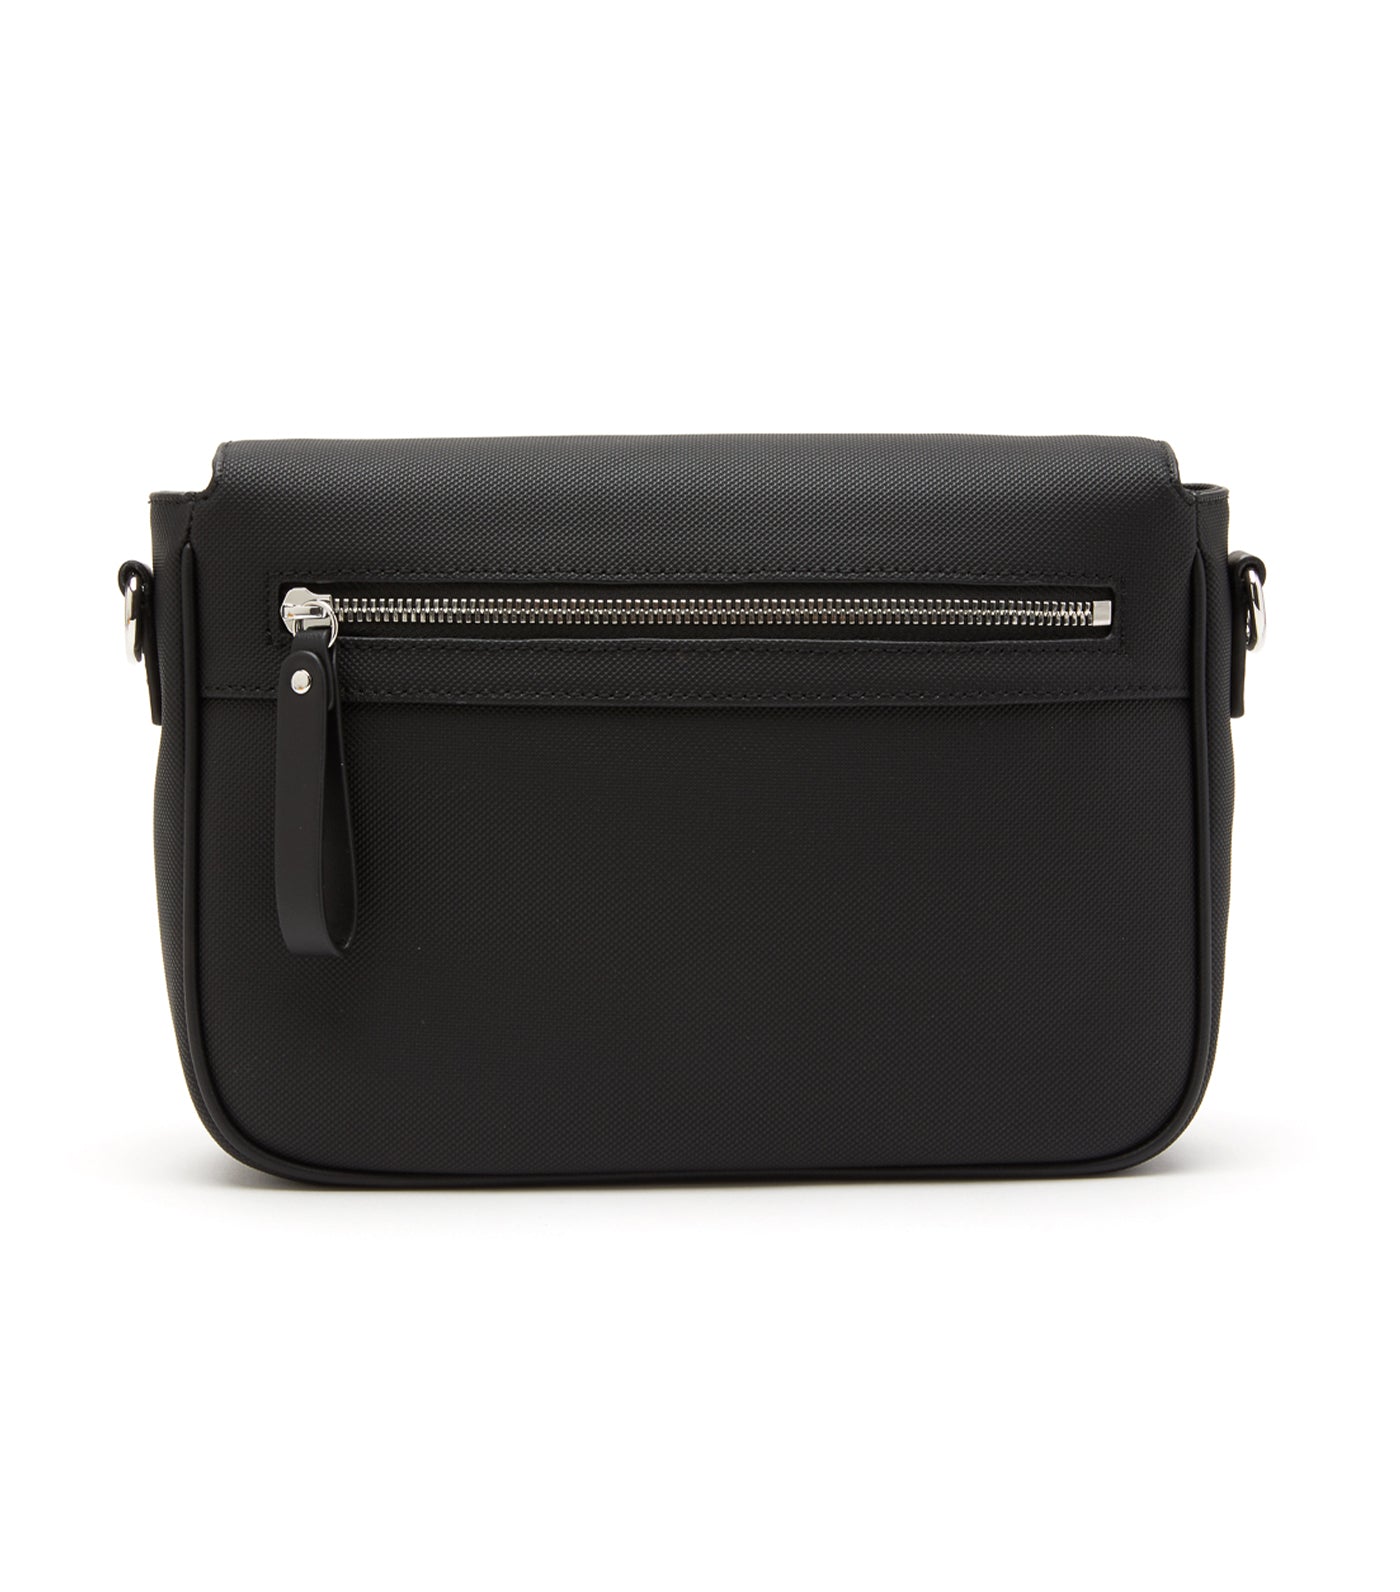  Lacoste Messenger Bag, Noir : Clothing, Shoes & Jewelry